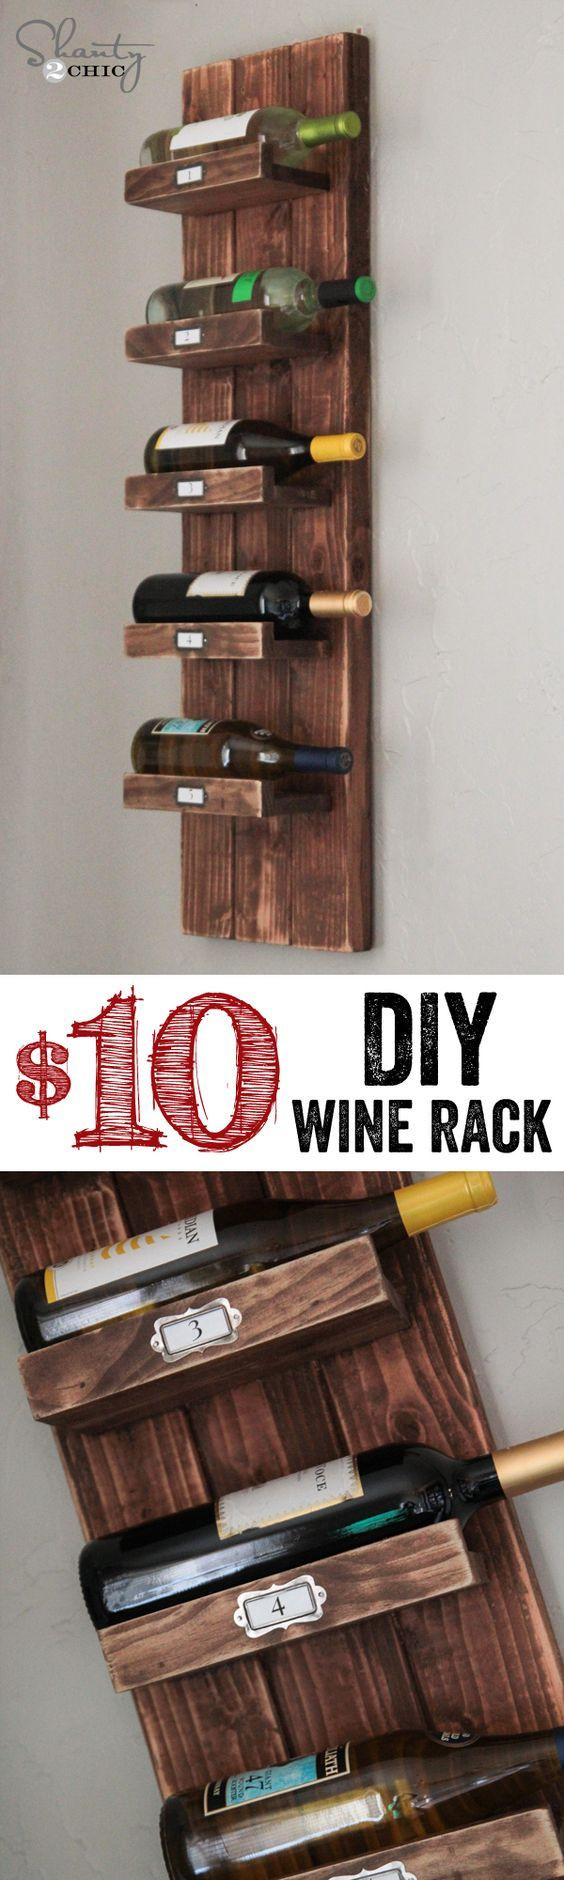 Best ideas about DIY Wine Rack Pinterest
. Save or Pin 1000 ideas about Diy Wine Racks on Pinterest Now.